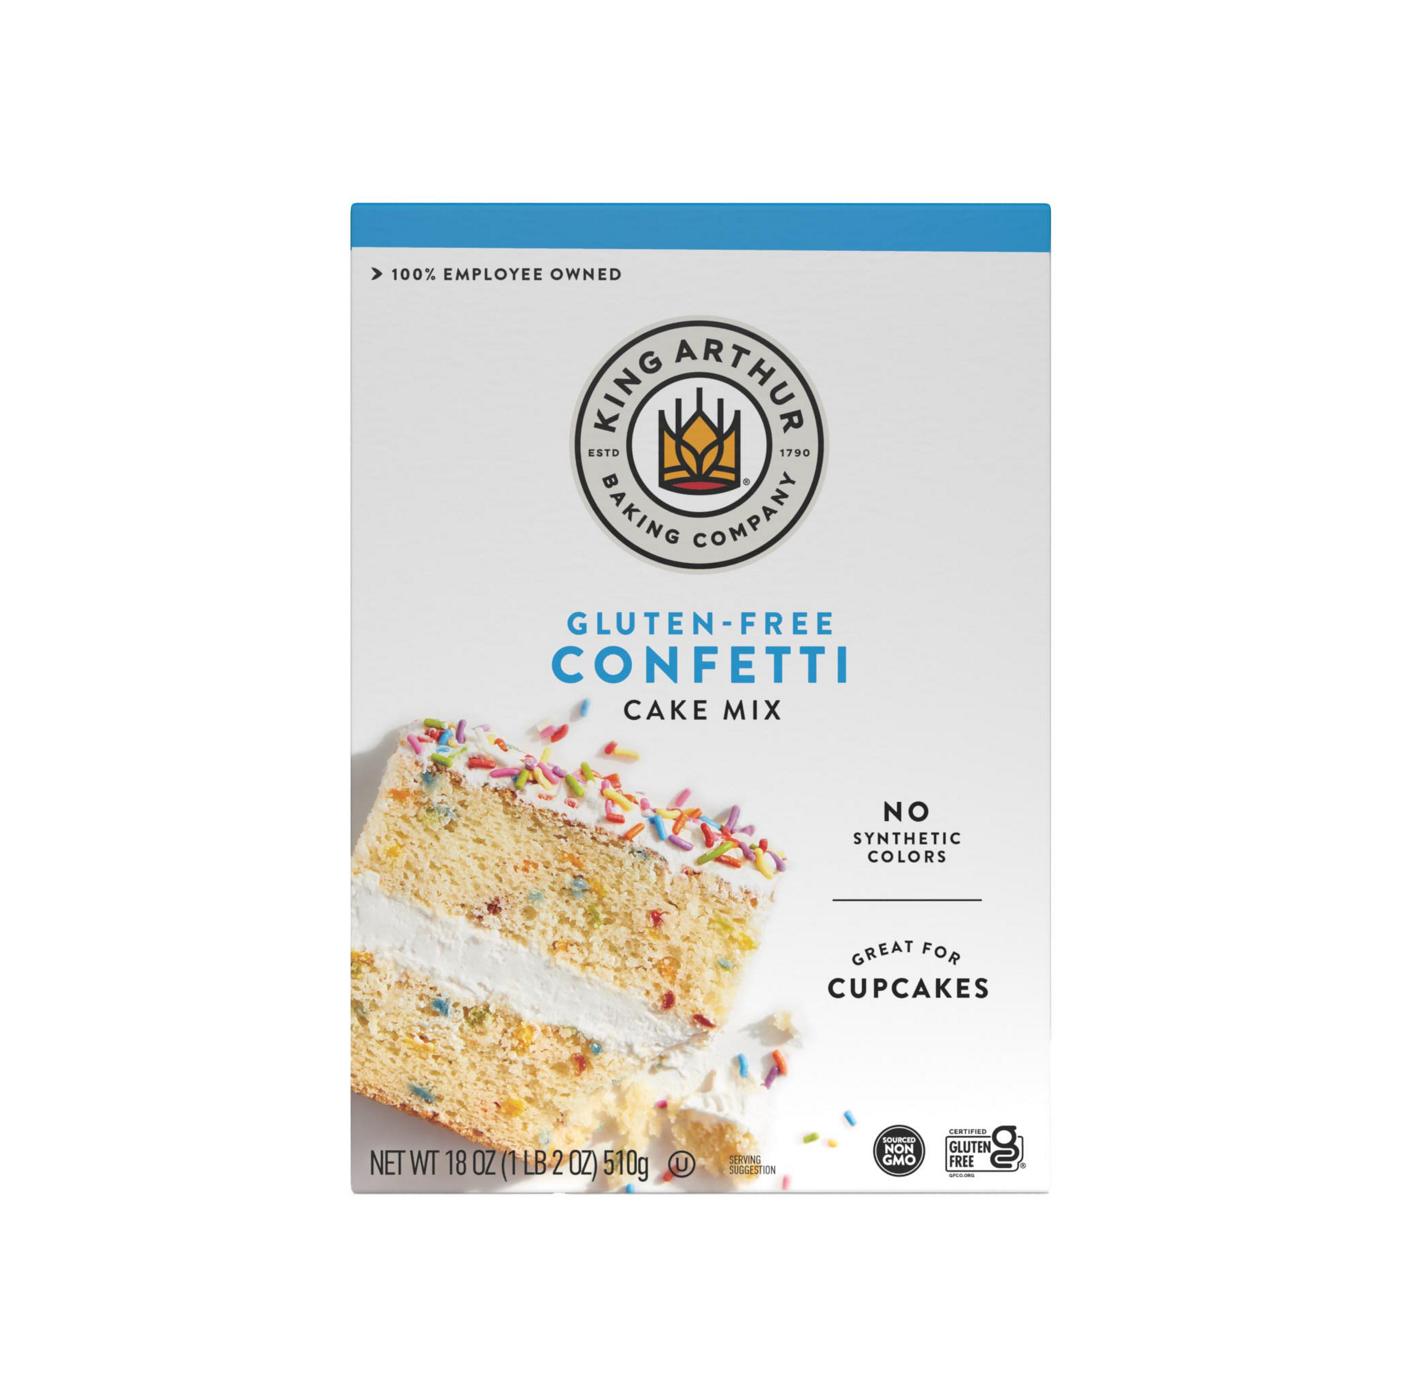 King Arthur Gluten Free Confetti Cake Mix; image 1 of 4